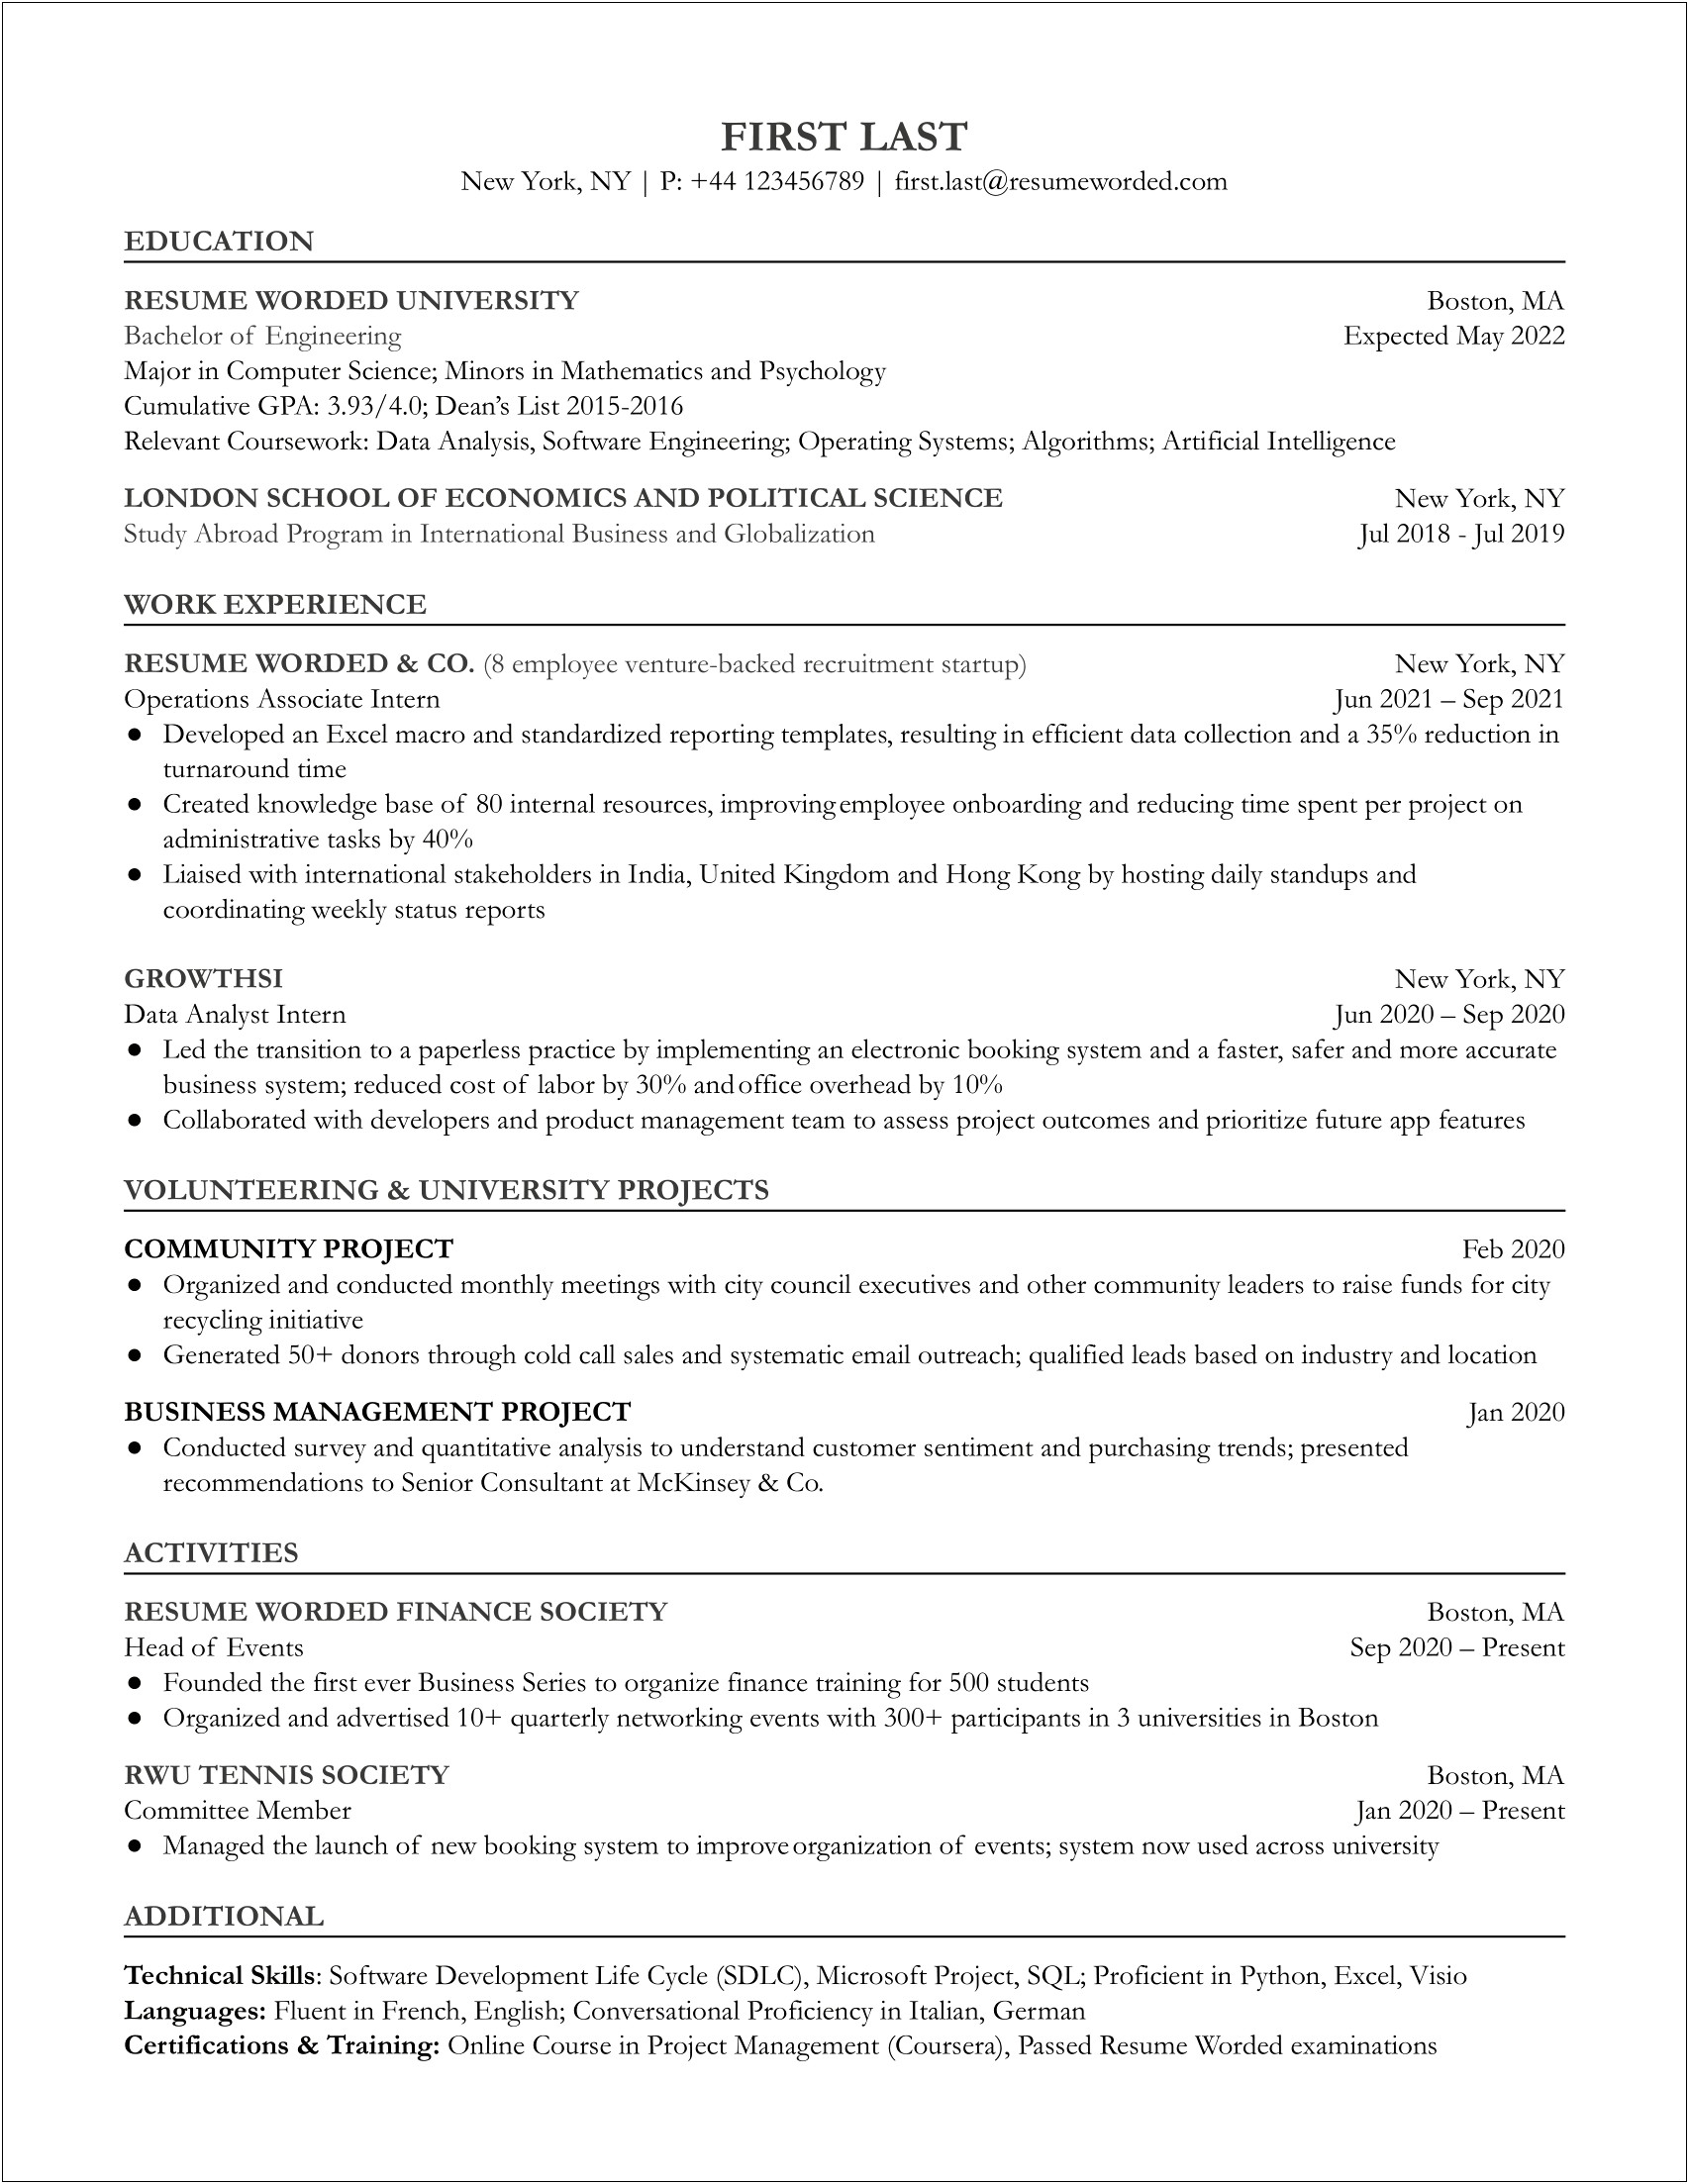 Recycling Center Job Description For Resume